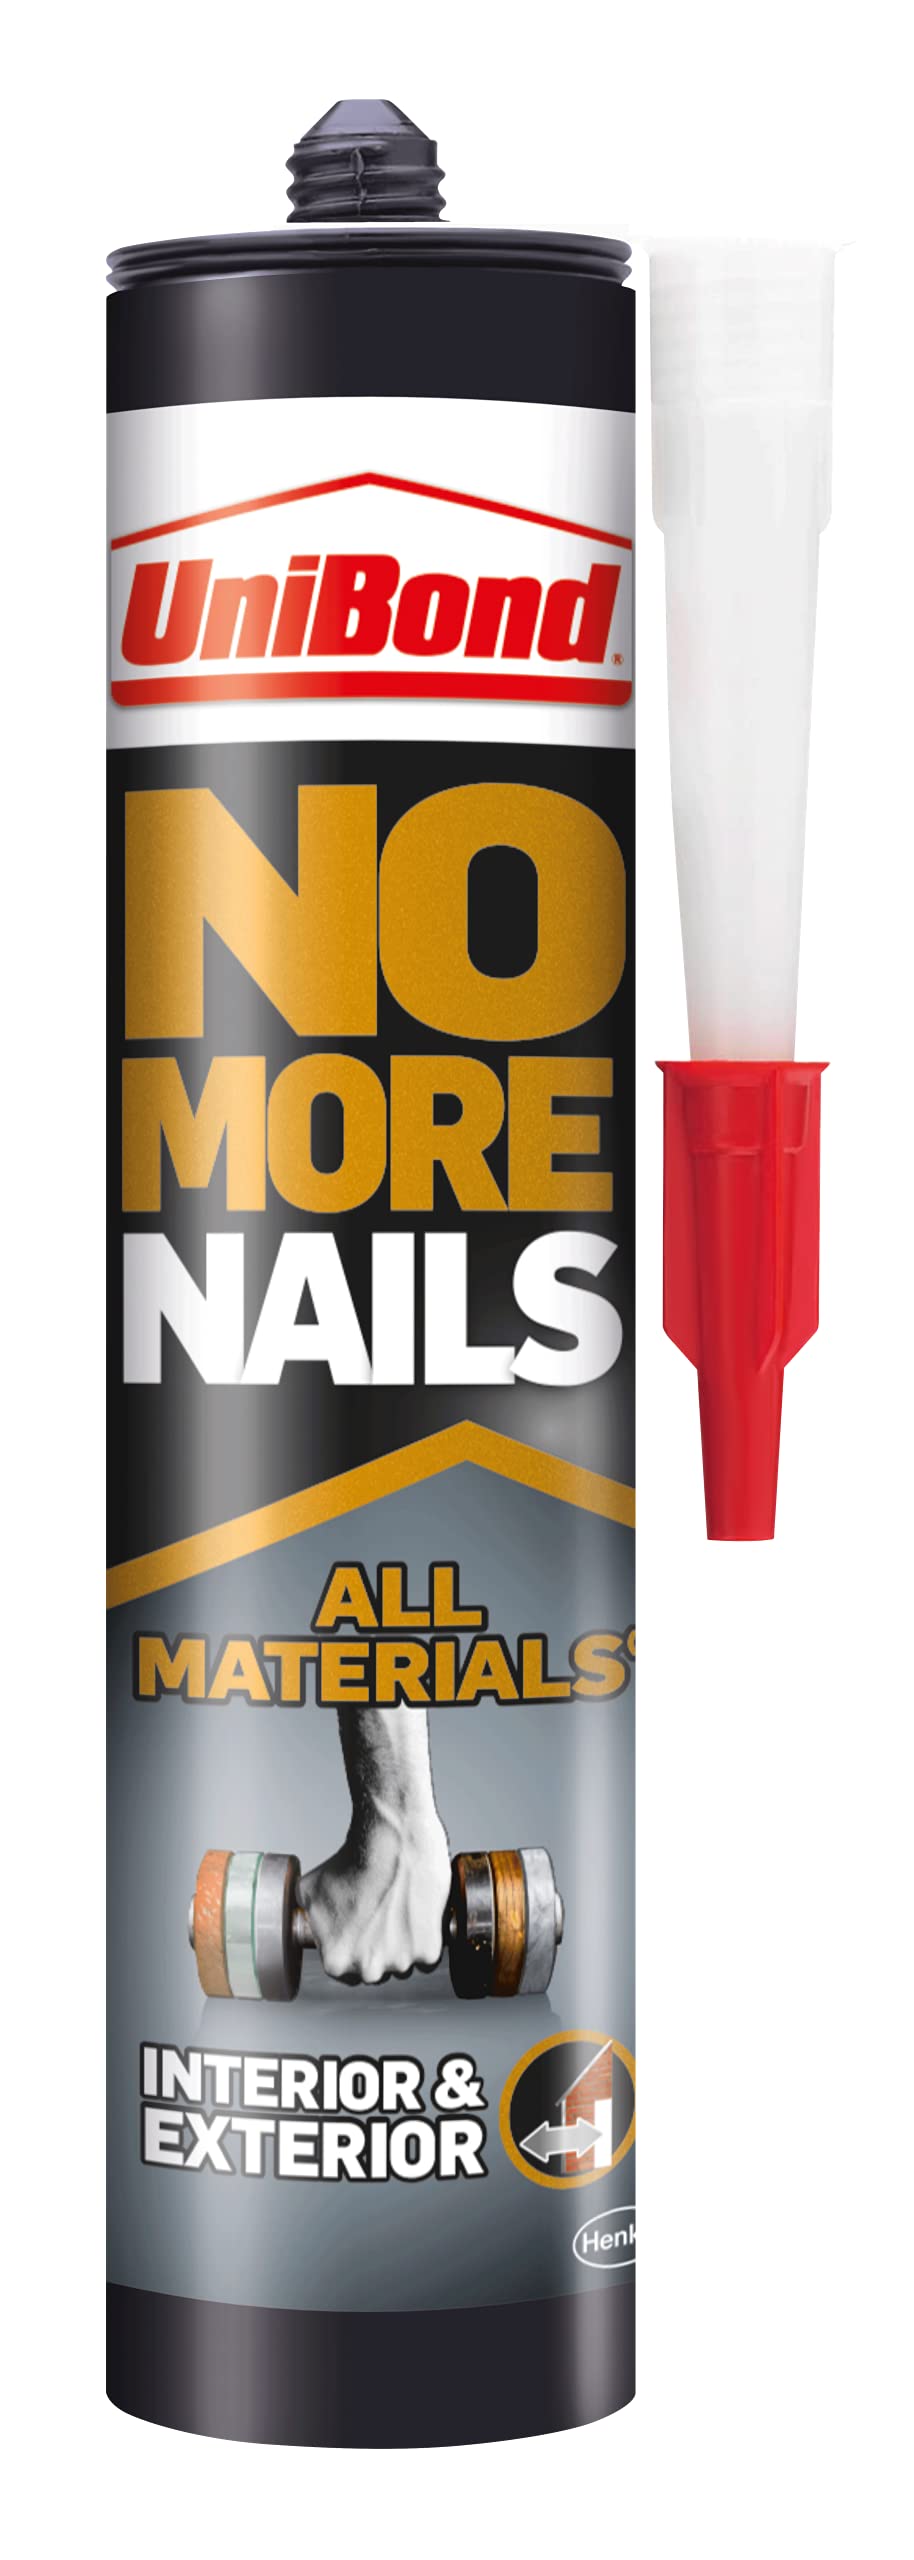 UniBond No More Nails All Materials Interior & Exterior - 390g